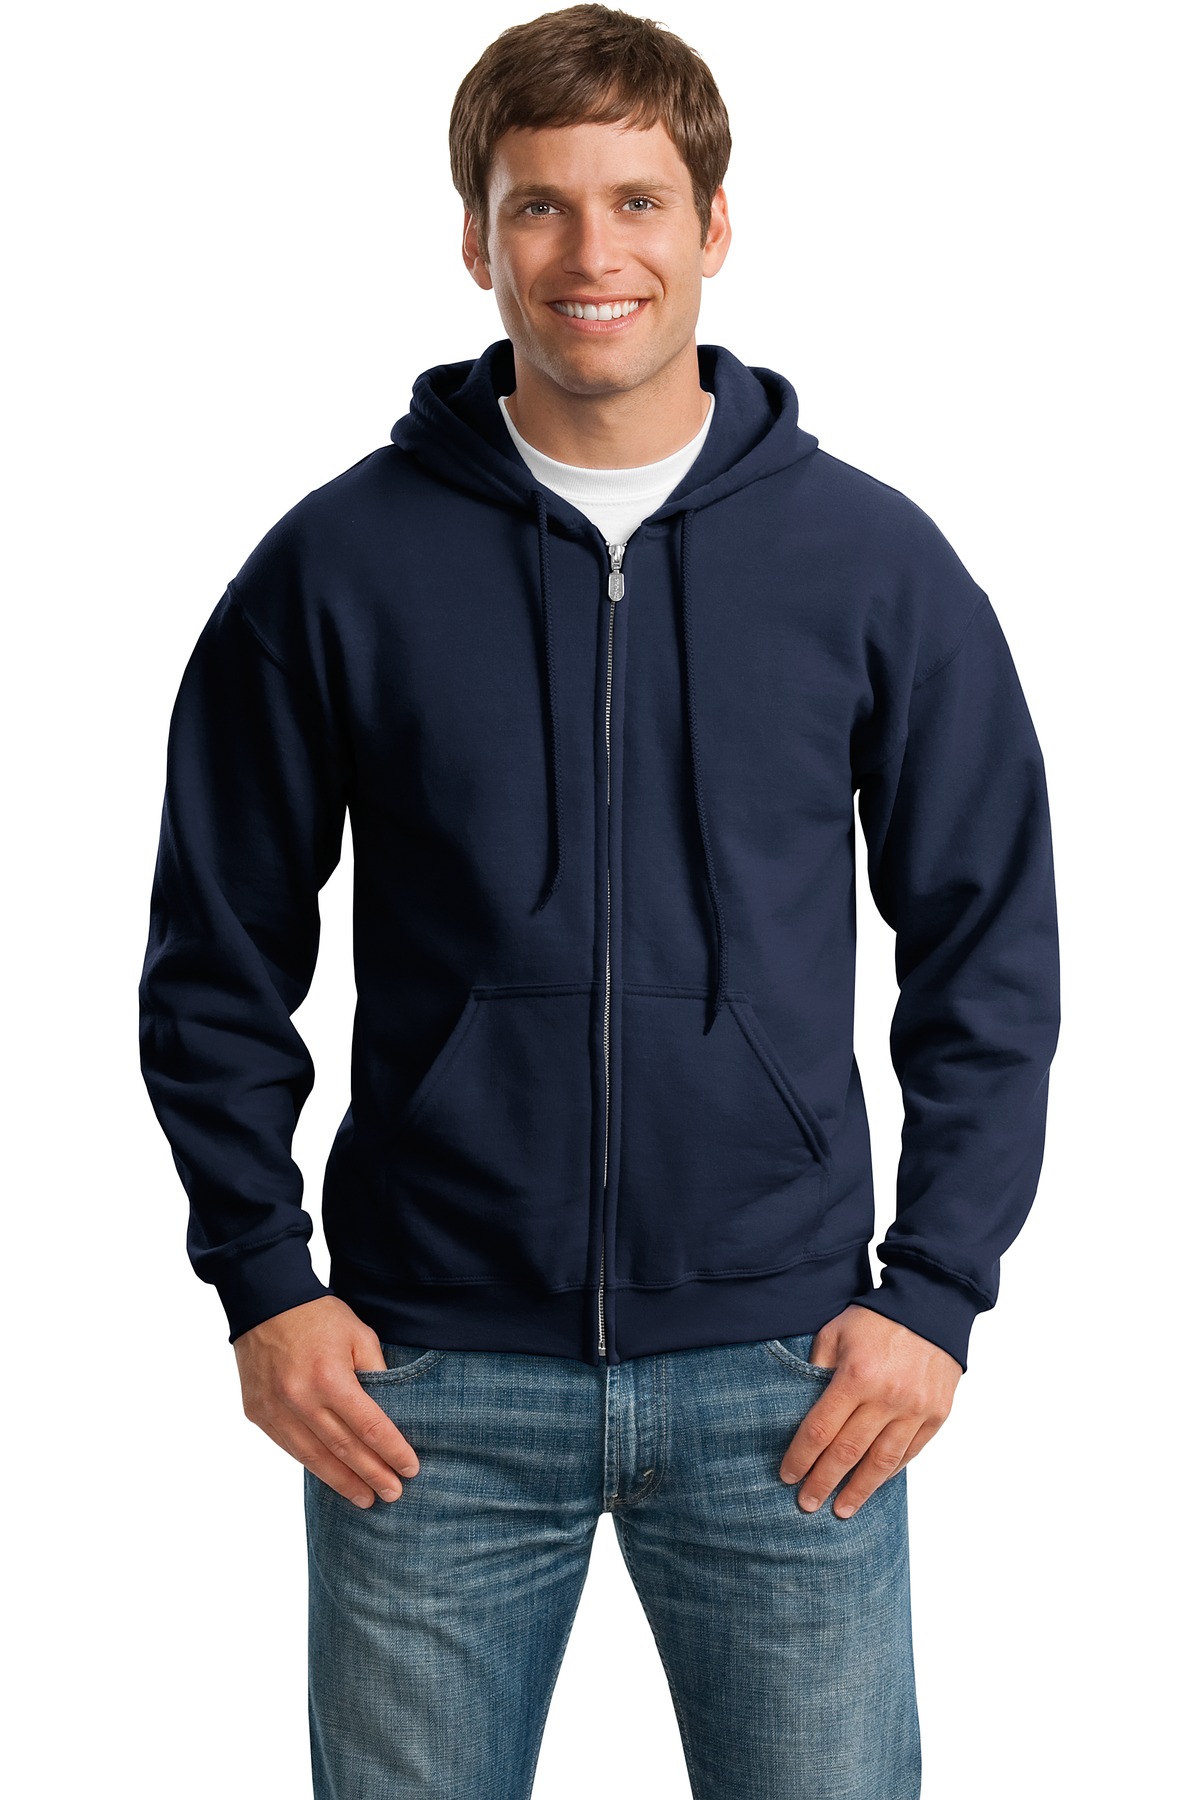 F- Adult Unisex Heavy Blend Full-Zip Hooded Sweatshirt